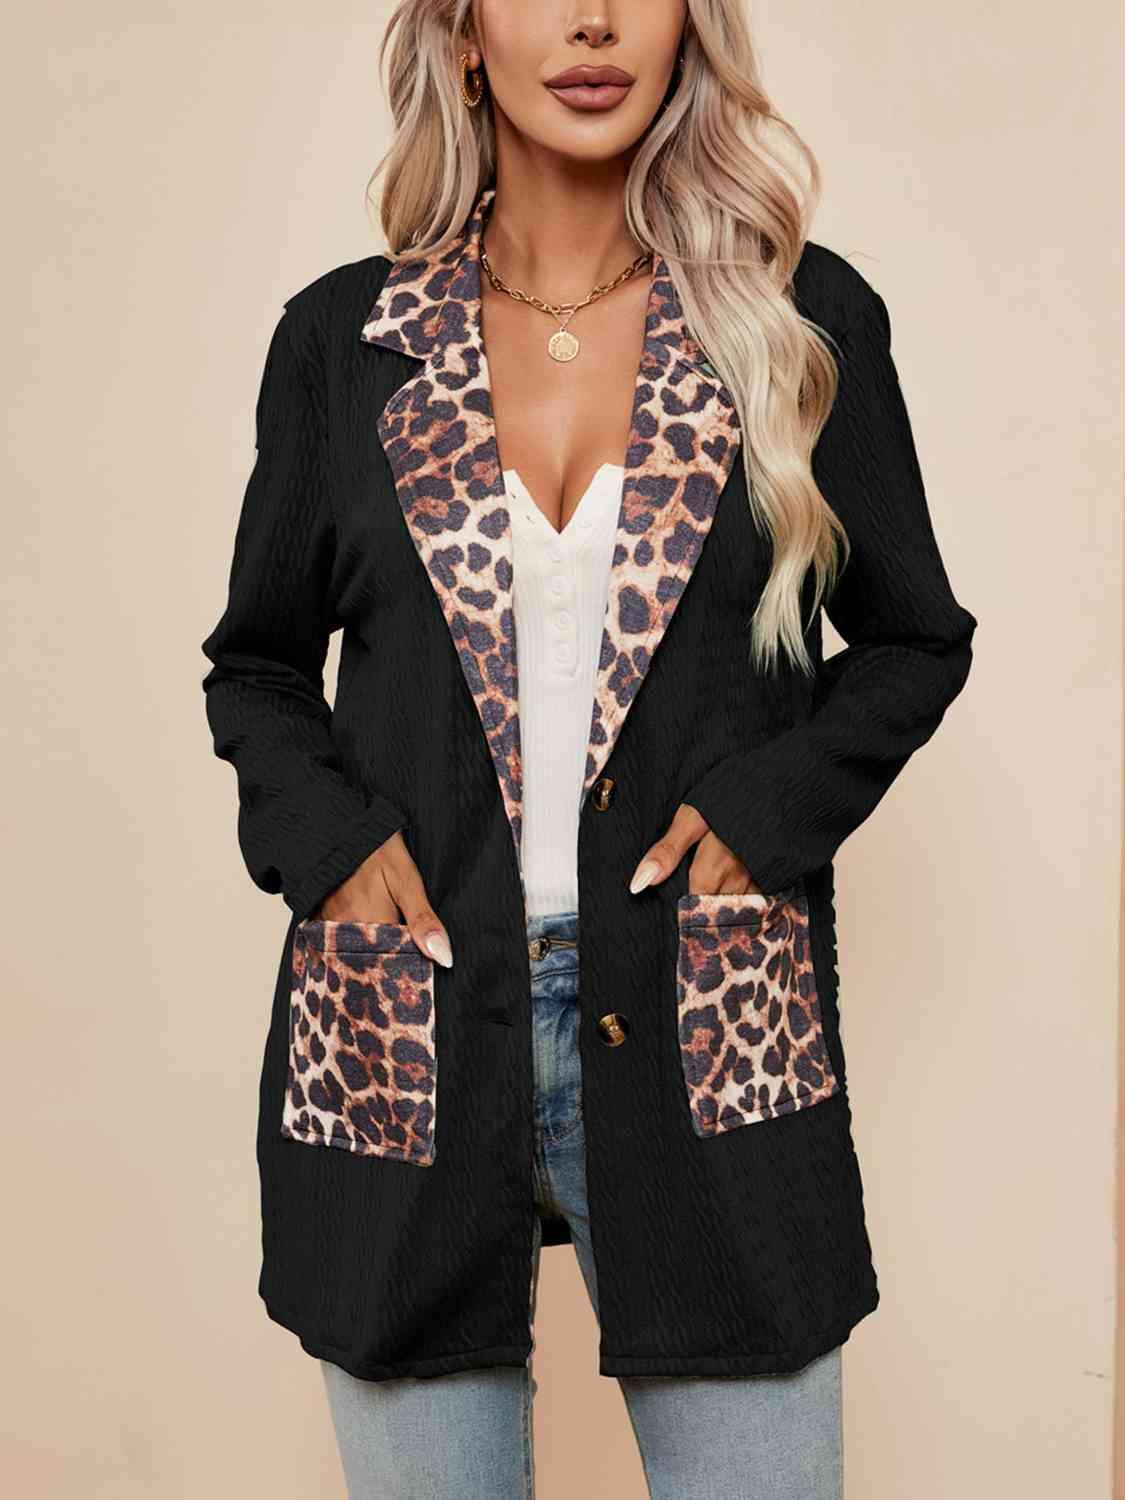 a woman wearing a black jacket with a leopard print pocket